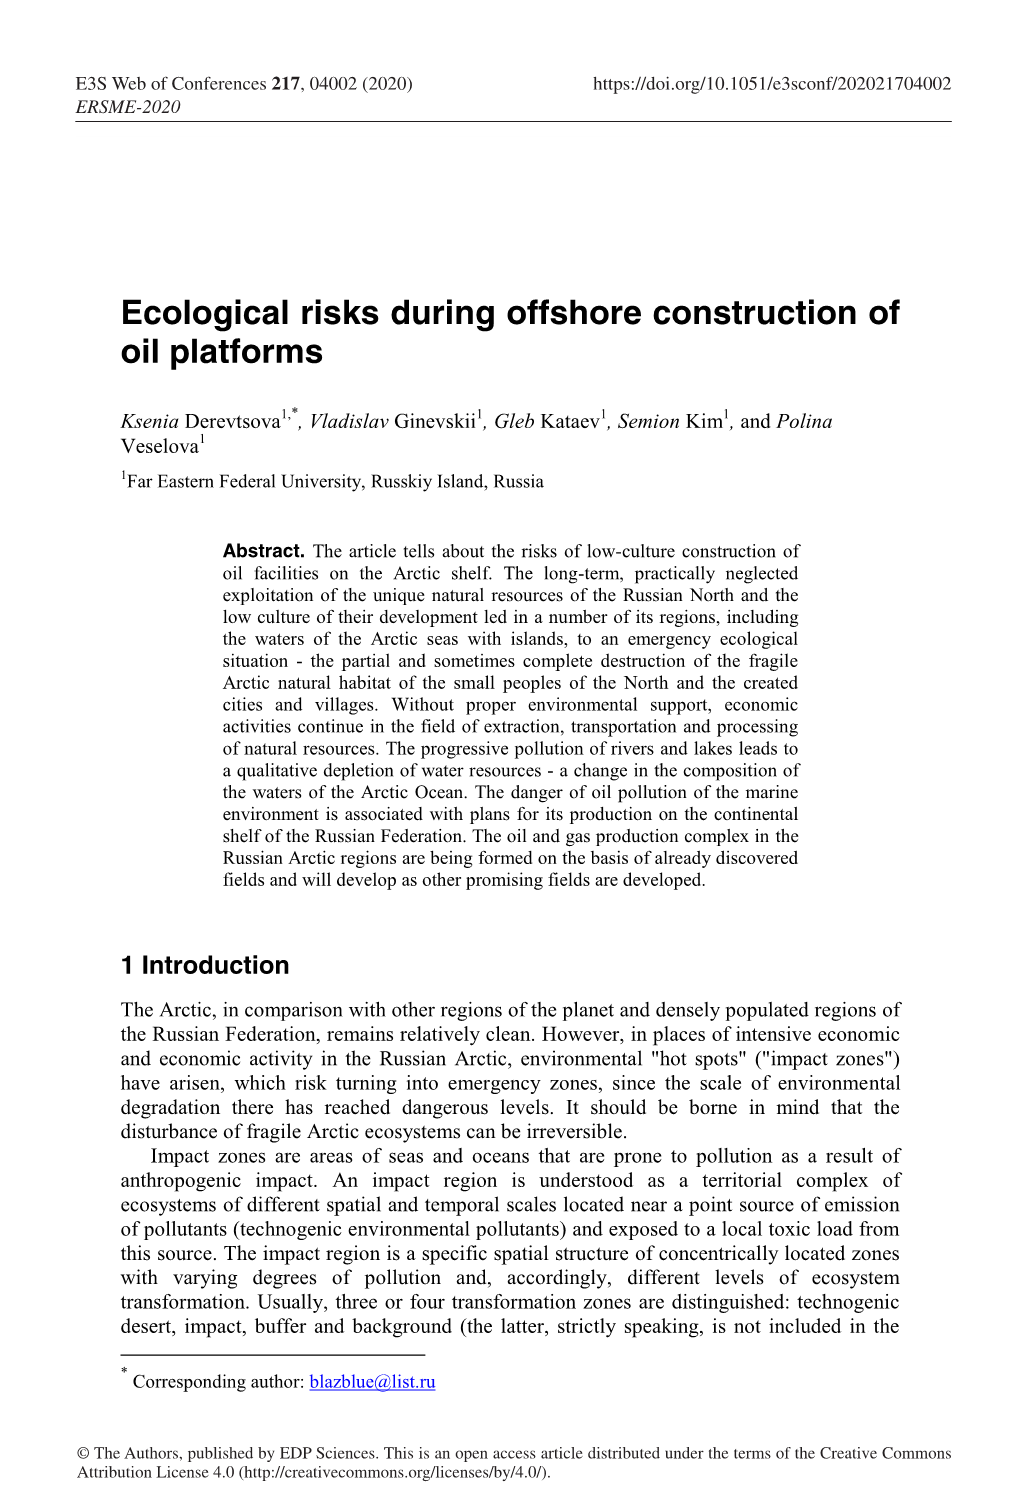 Ecological Risks During Offshore Construction of Oil Platforms